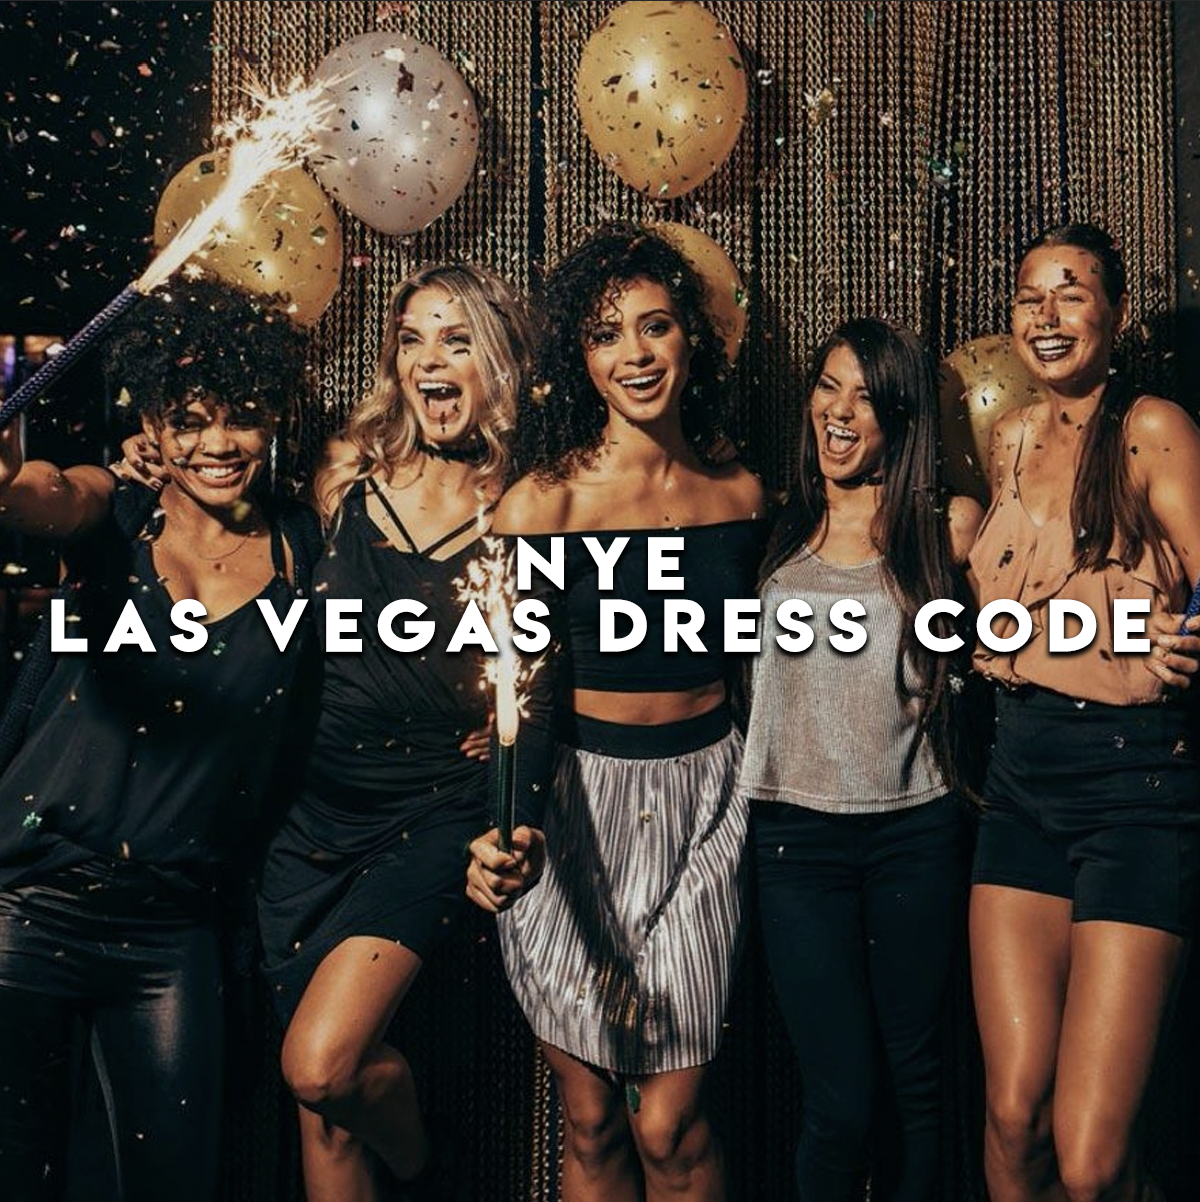 Las Vegas Pool Party Dress Code - What to Wear?, pool party vegas 